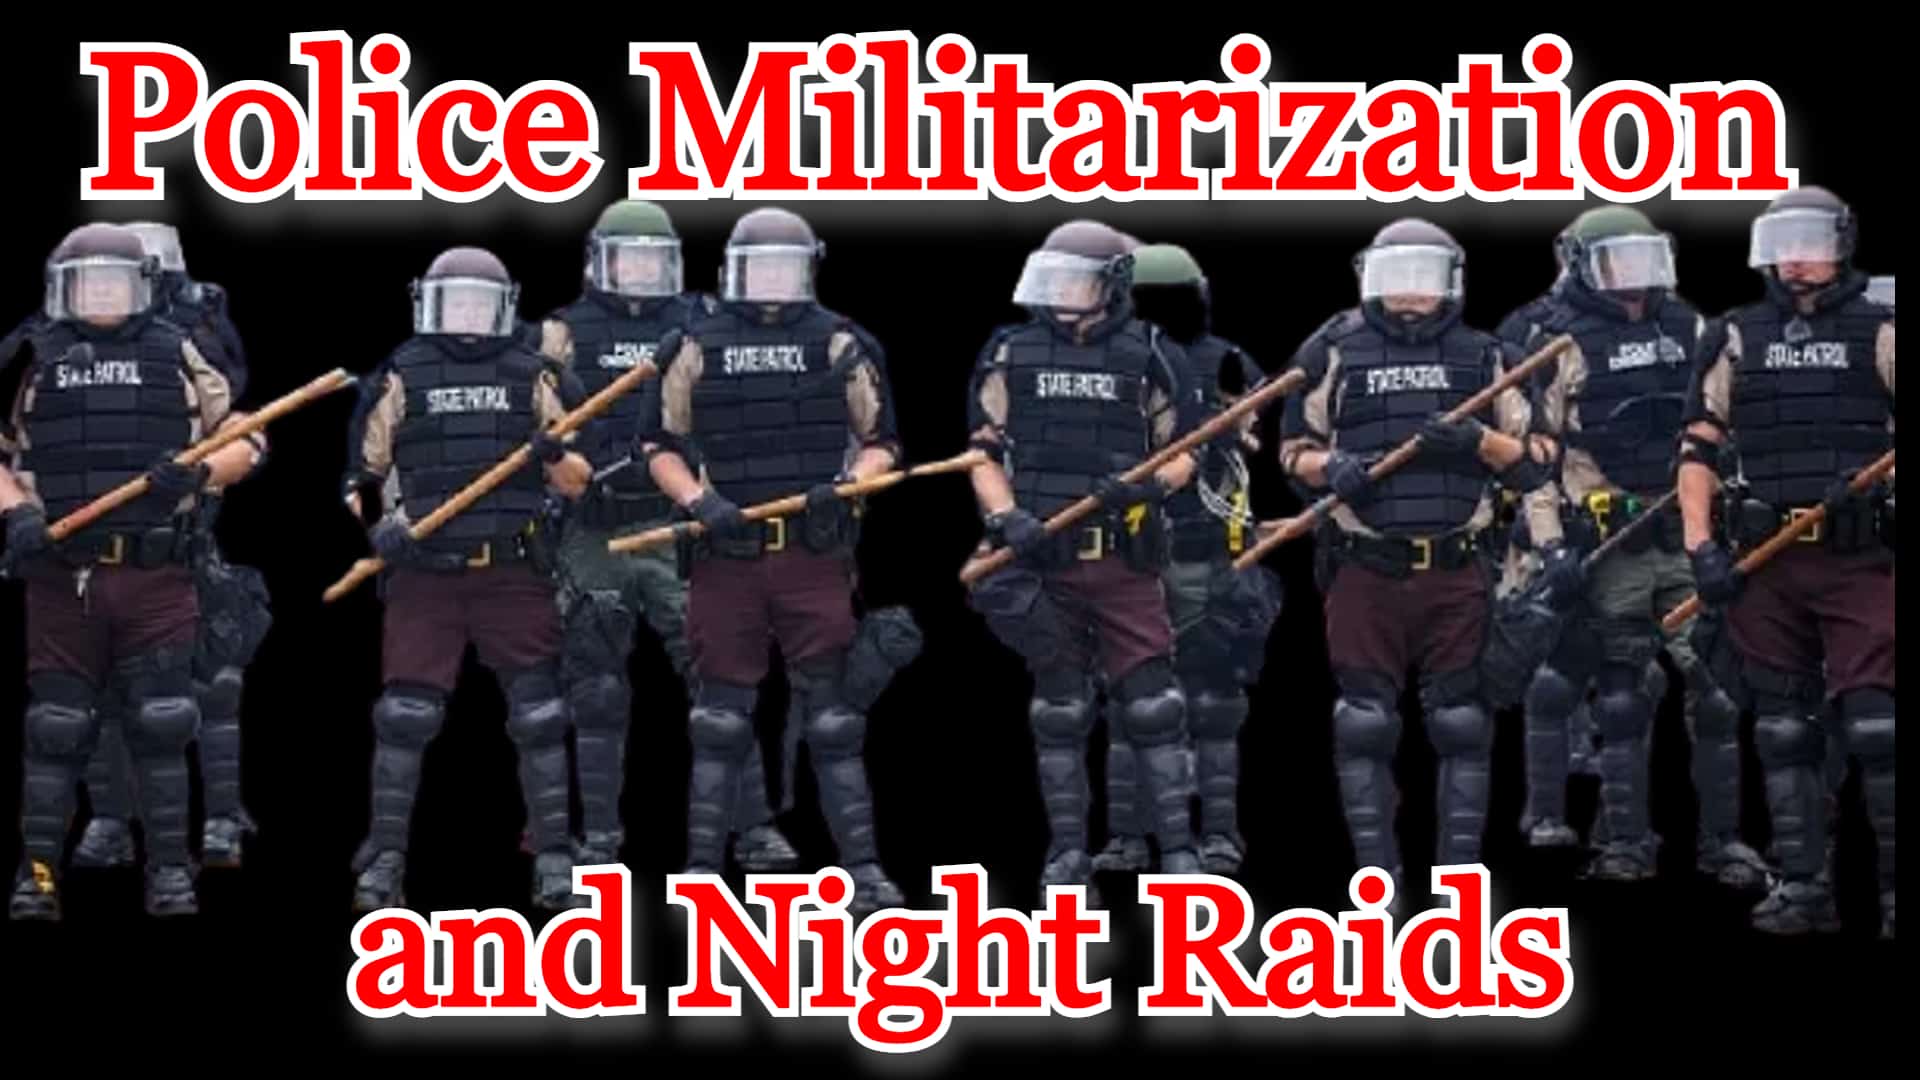 COI #231:  Police Militarization and Night Raids